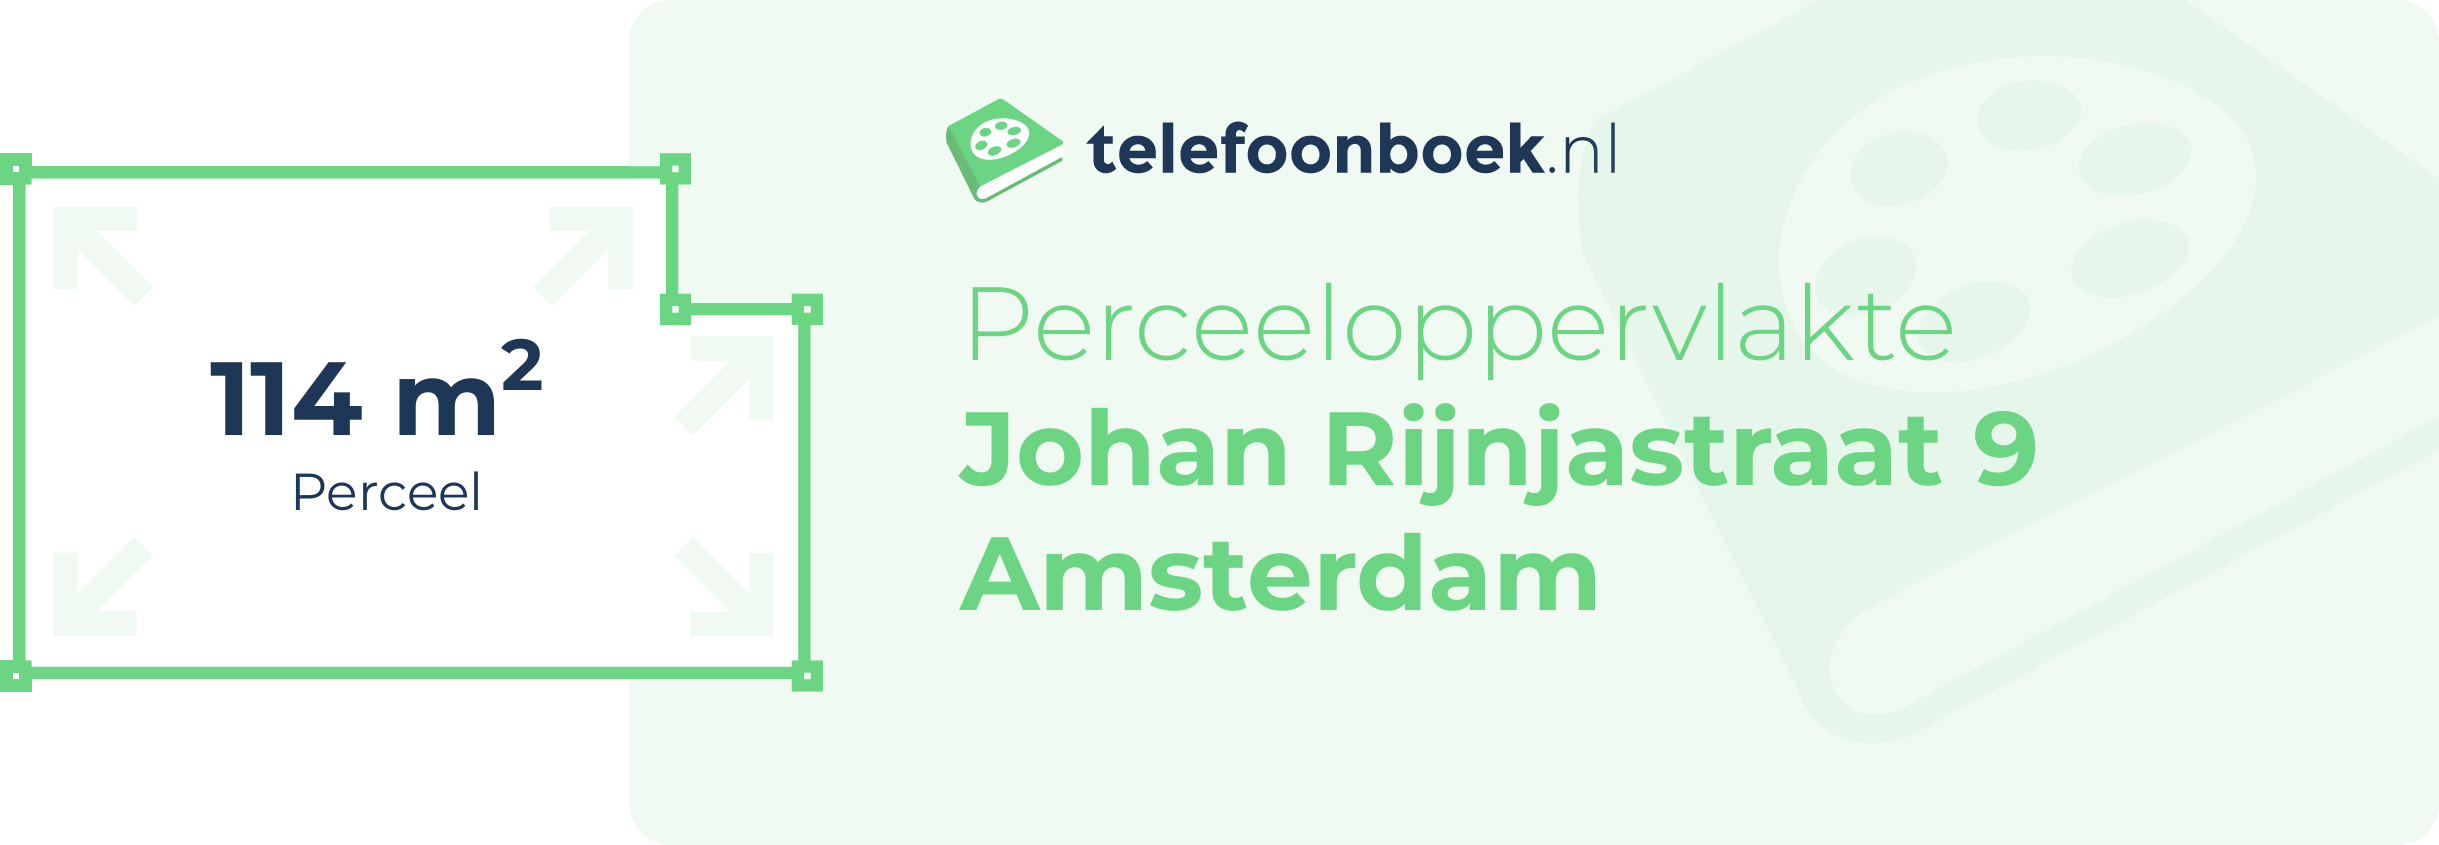 Perceeloppervlakte Johan Rijnjastraat 9 Amsterdam